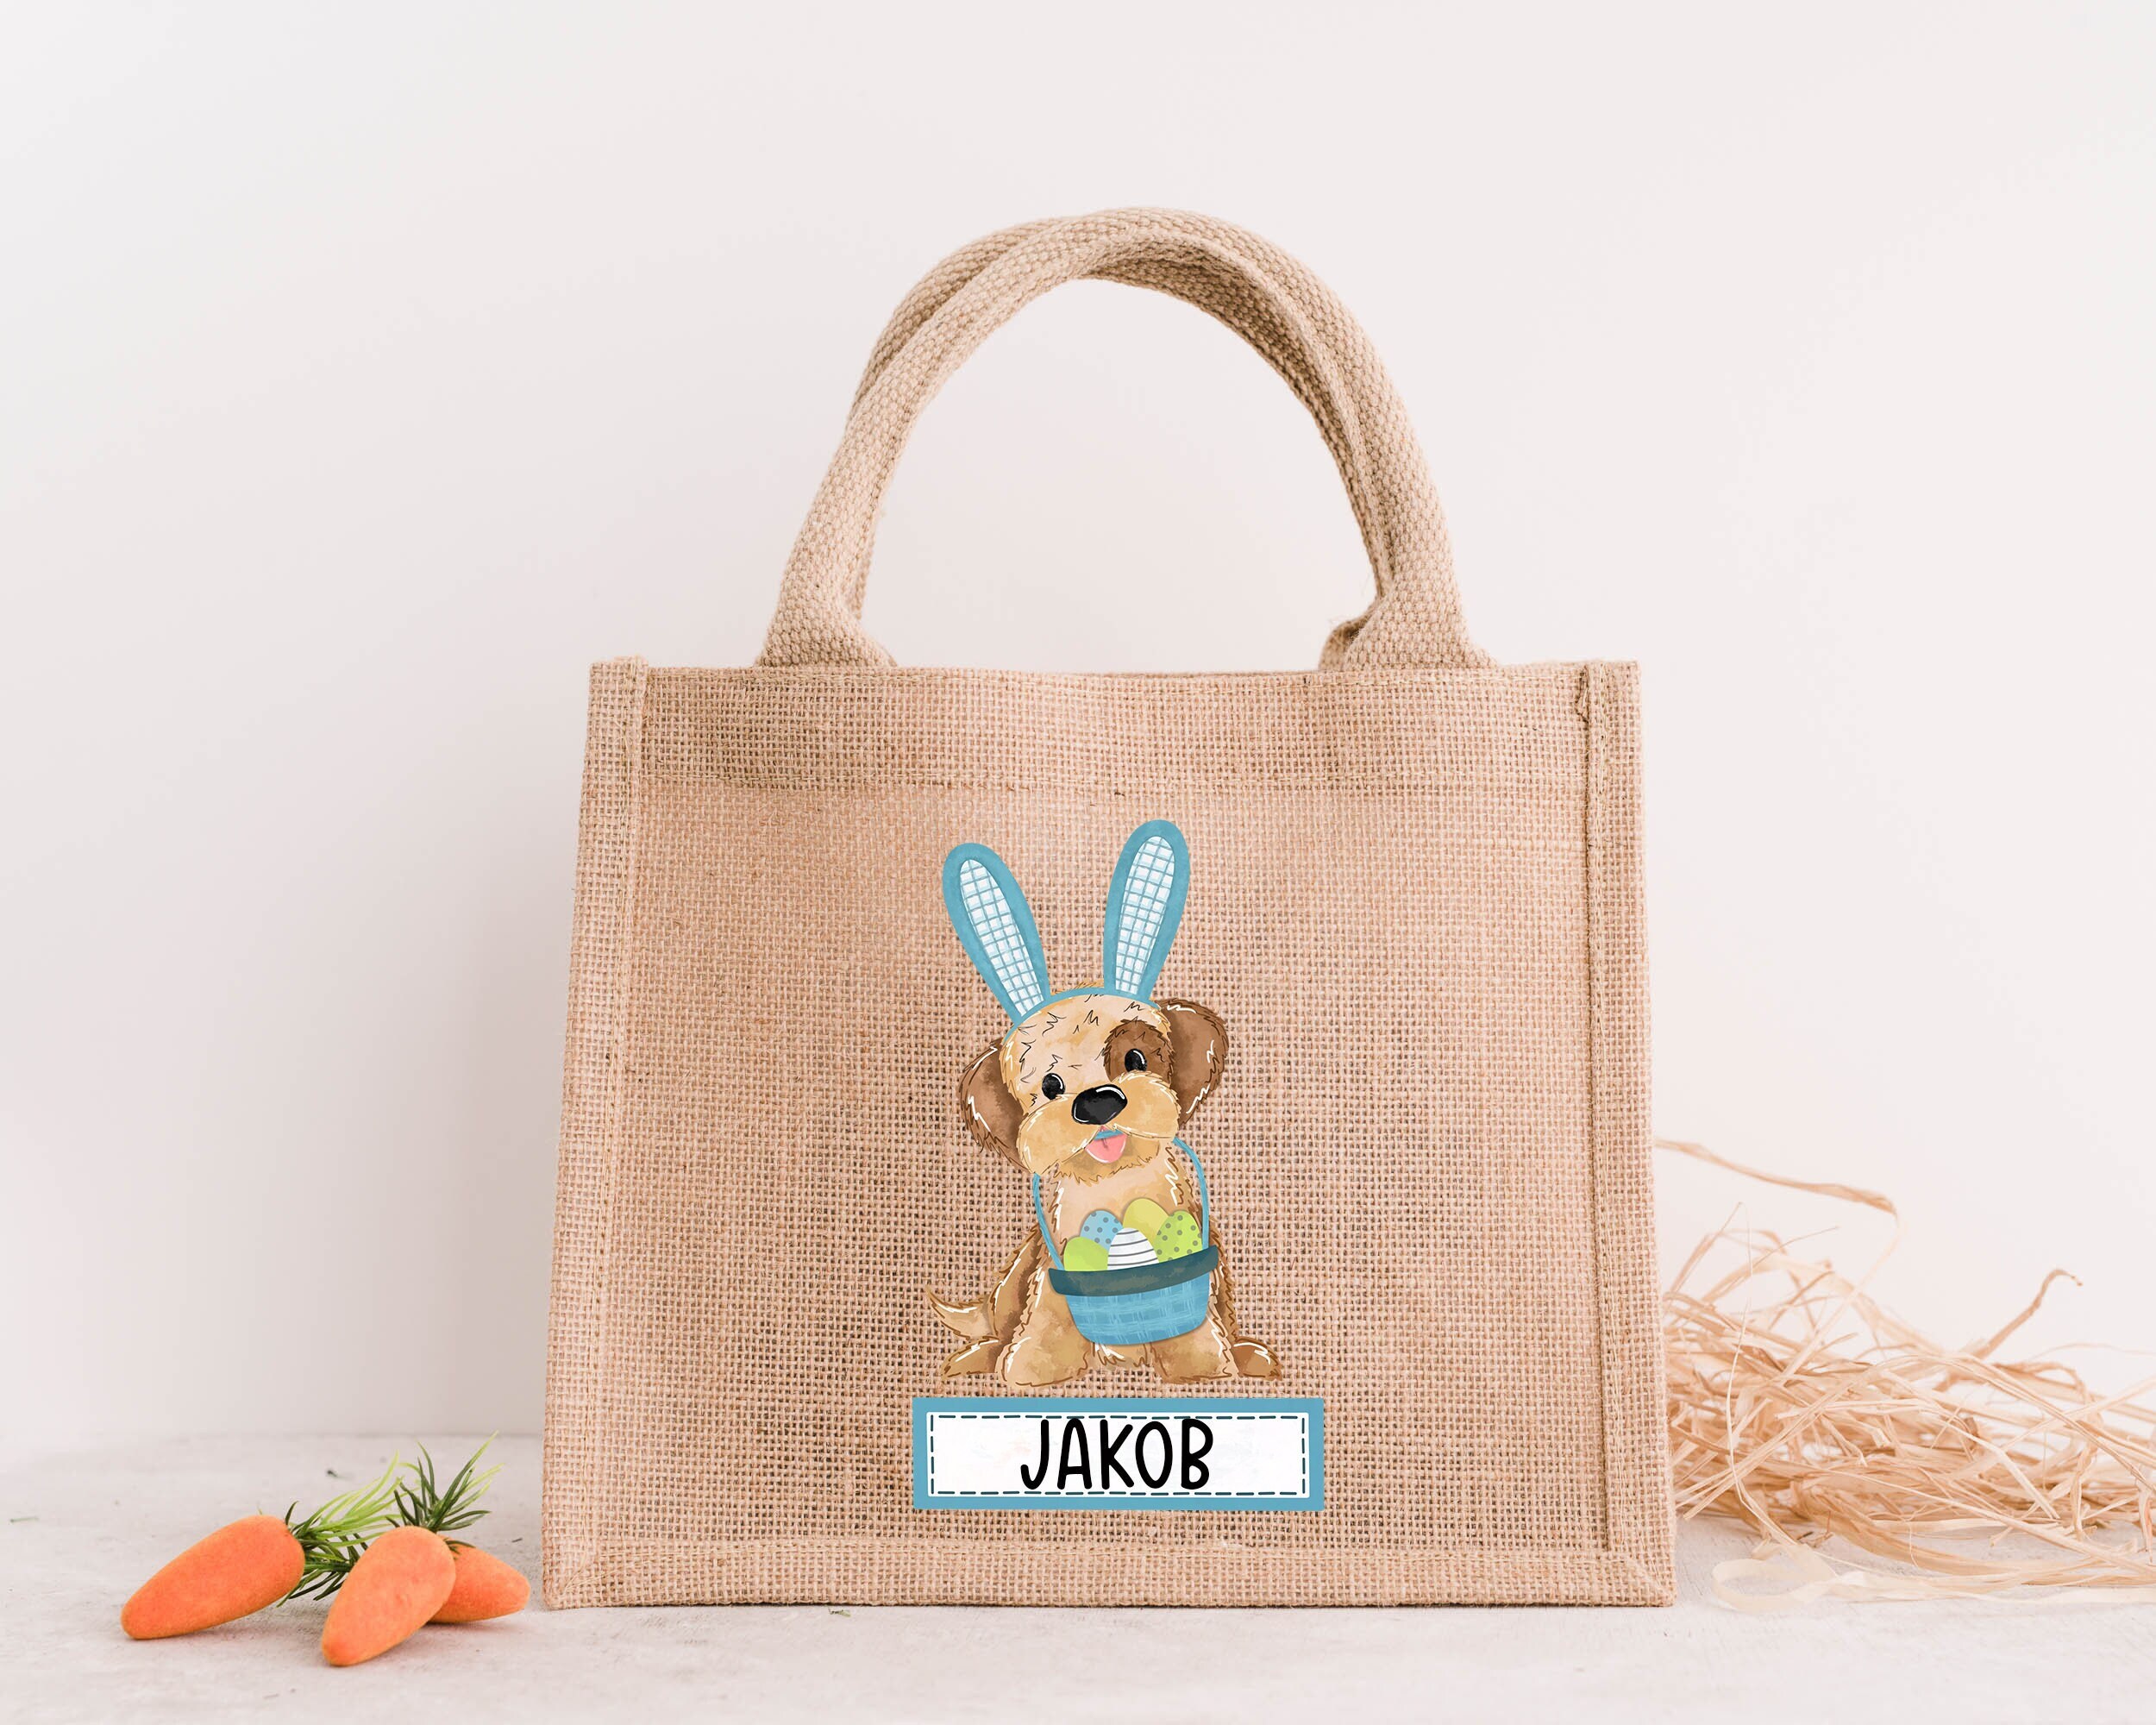 Easter Bunny Burlap Bag Baskets Jute. Easter Egg Hunt Bags. Brand New